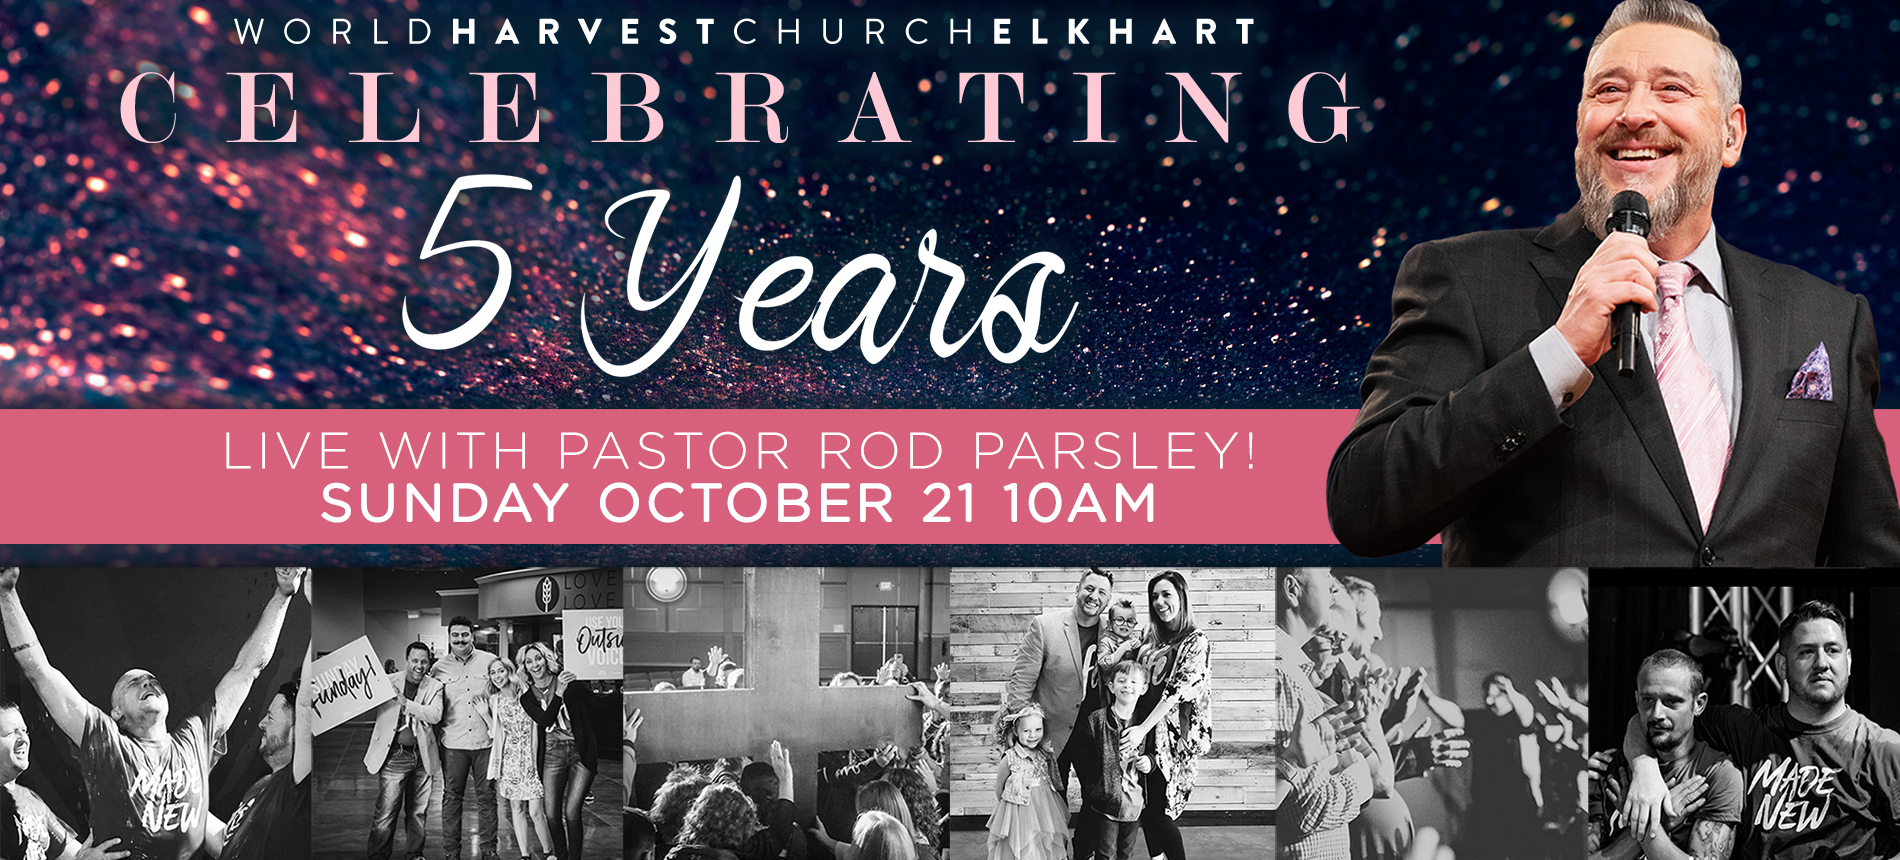 World Harvest Church Elkhart | Celebrating 5 years | Live with Pastor Rod Parsley | Sunday Octoder 21 | 10AM